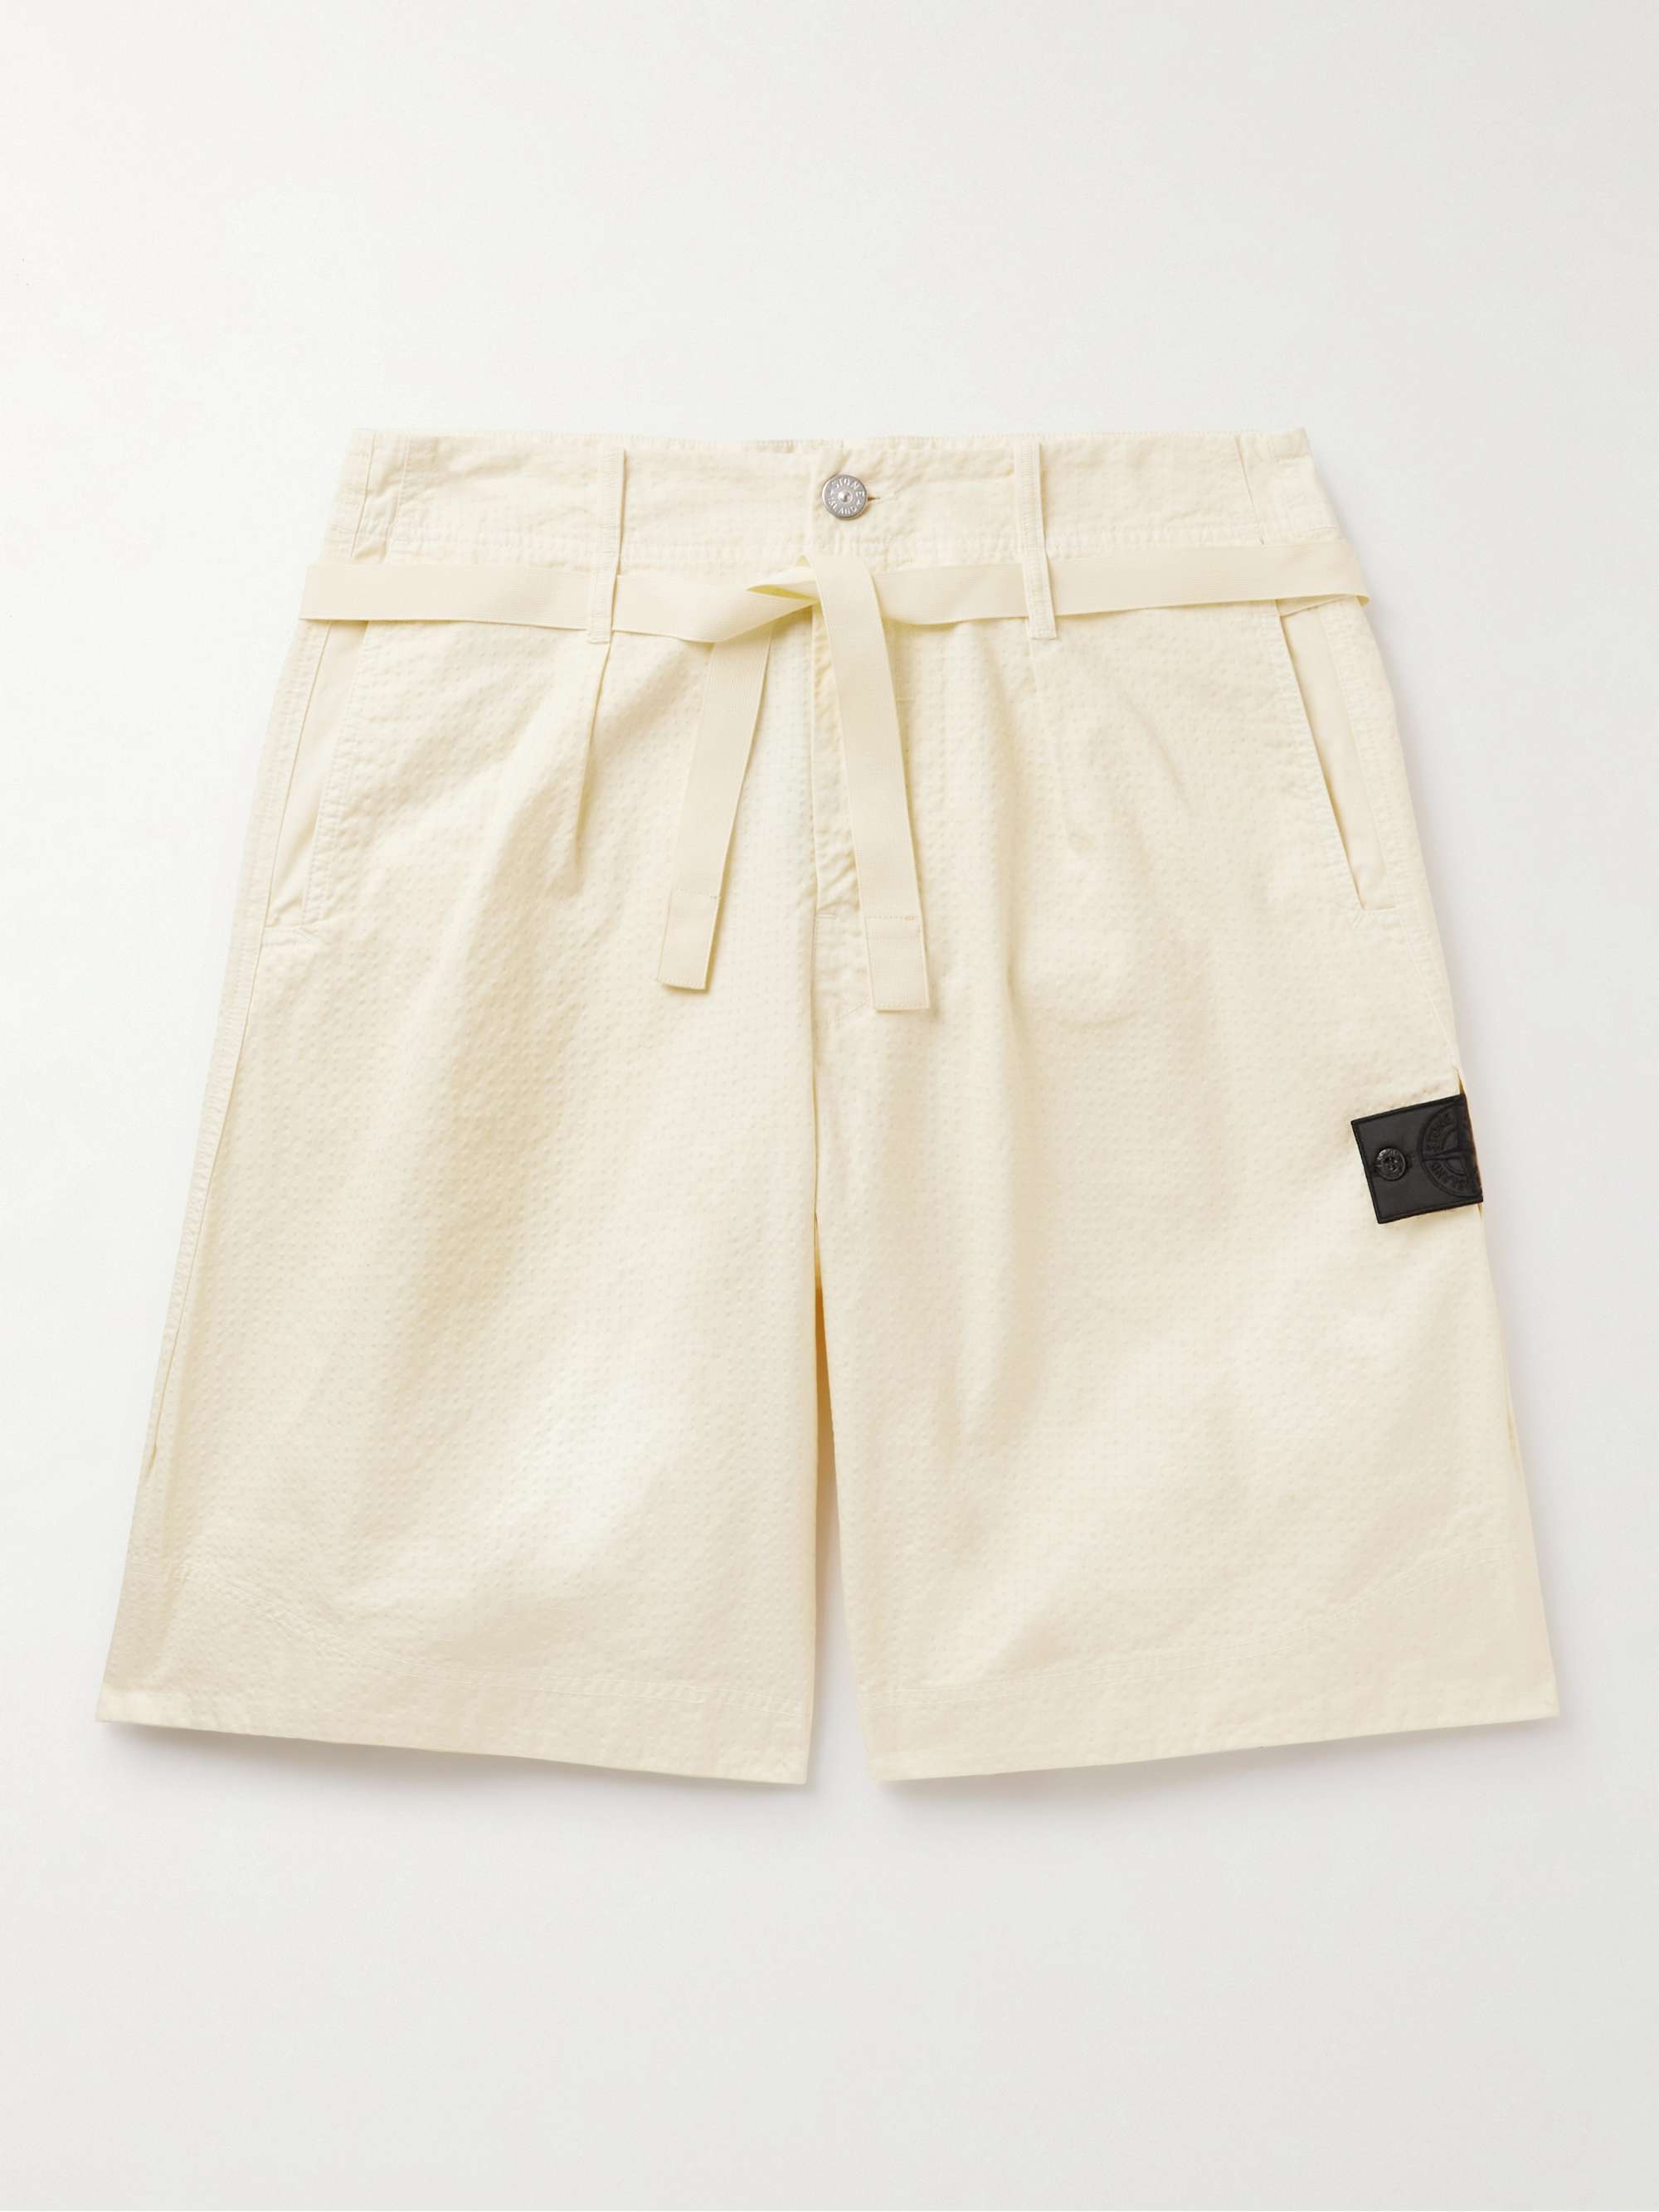 STONE ISLAND SHADOW PROJECT Straight-Leg Belted Cotton-Blend Seersucker  Shorts for Men